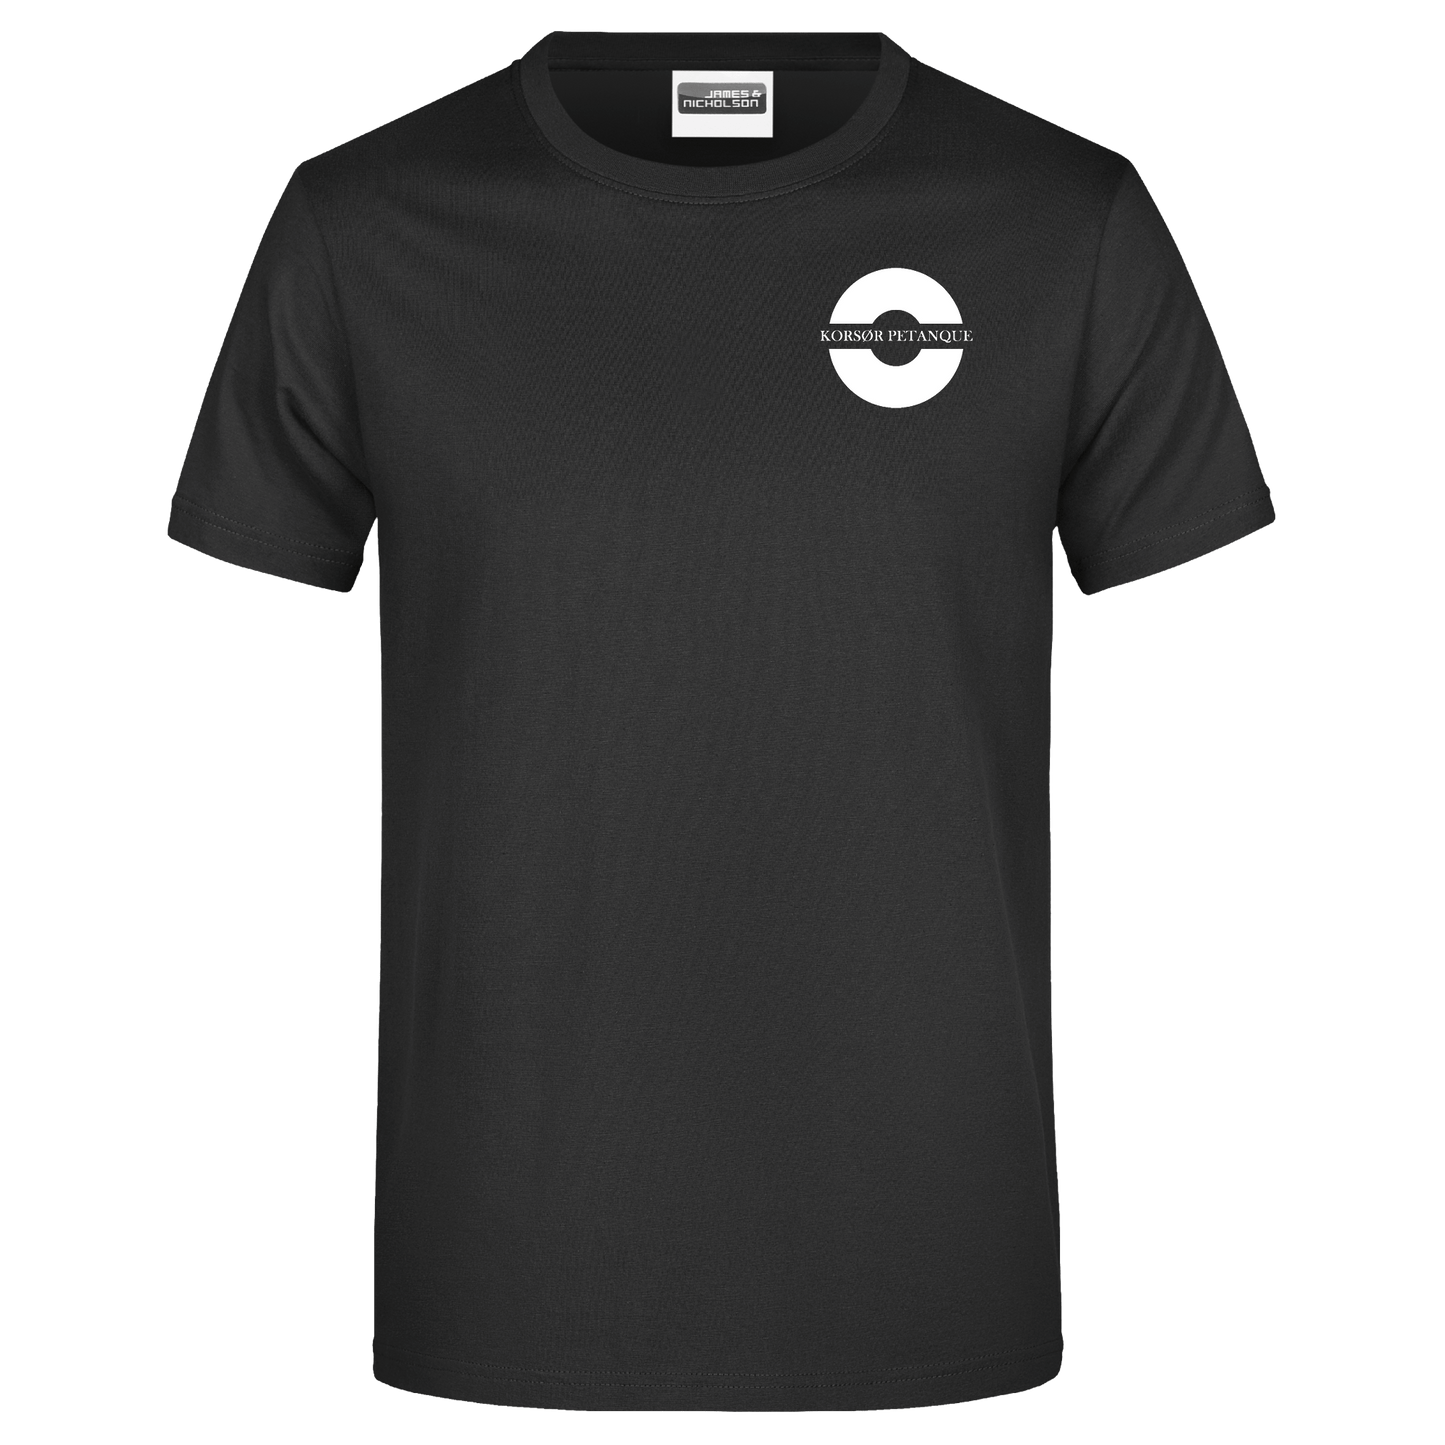 Bomulds T-shirt - Barn - Korsør petanque klub